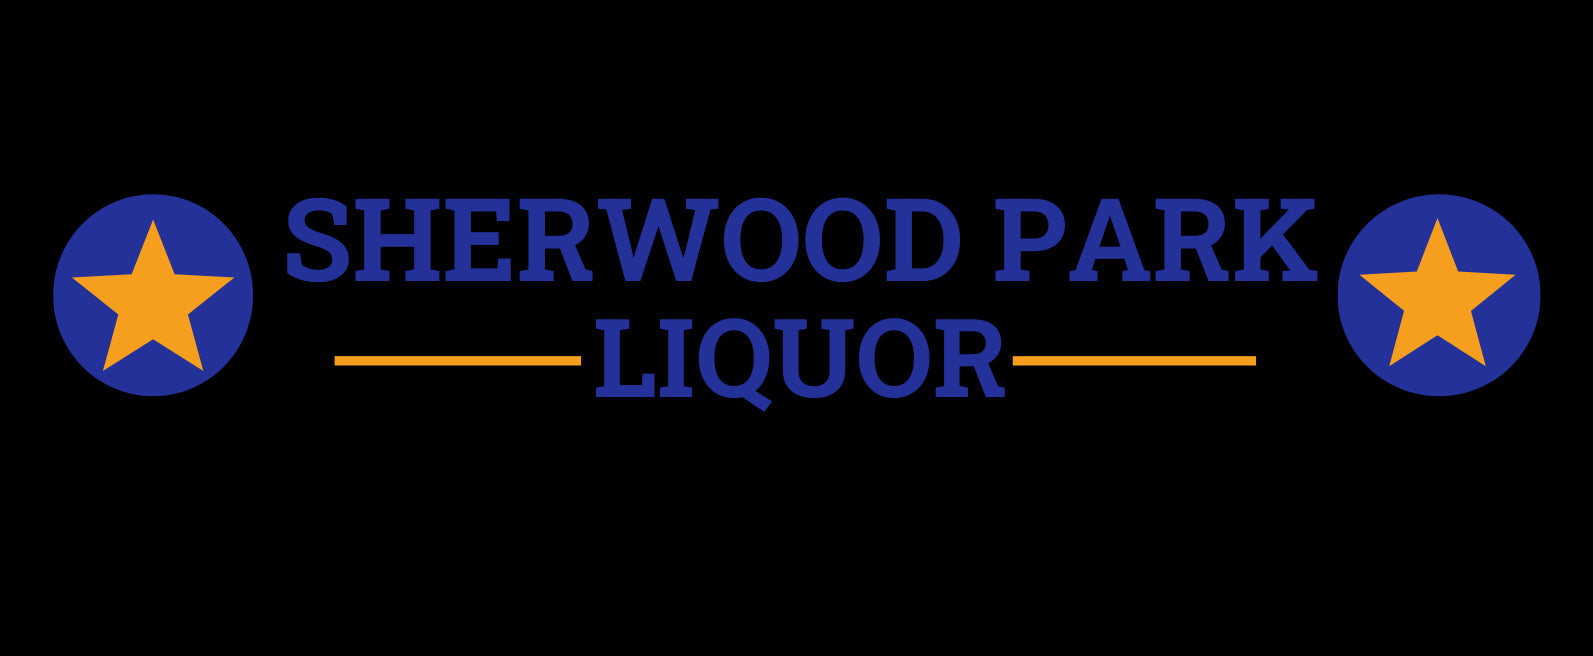 Sherwood Park Liquor Logo